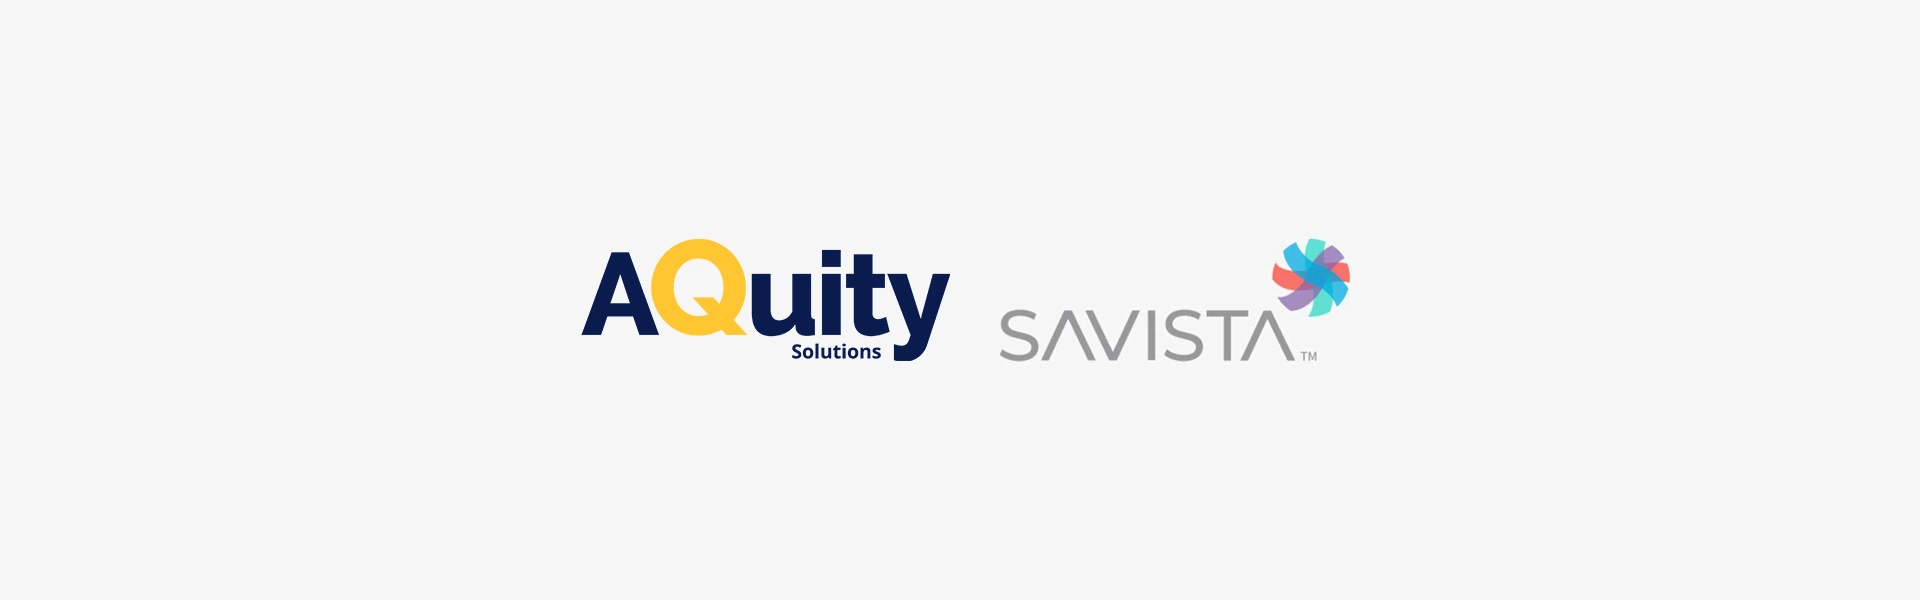 AQuity Solutions and Savista Partnership